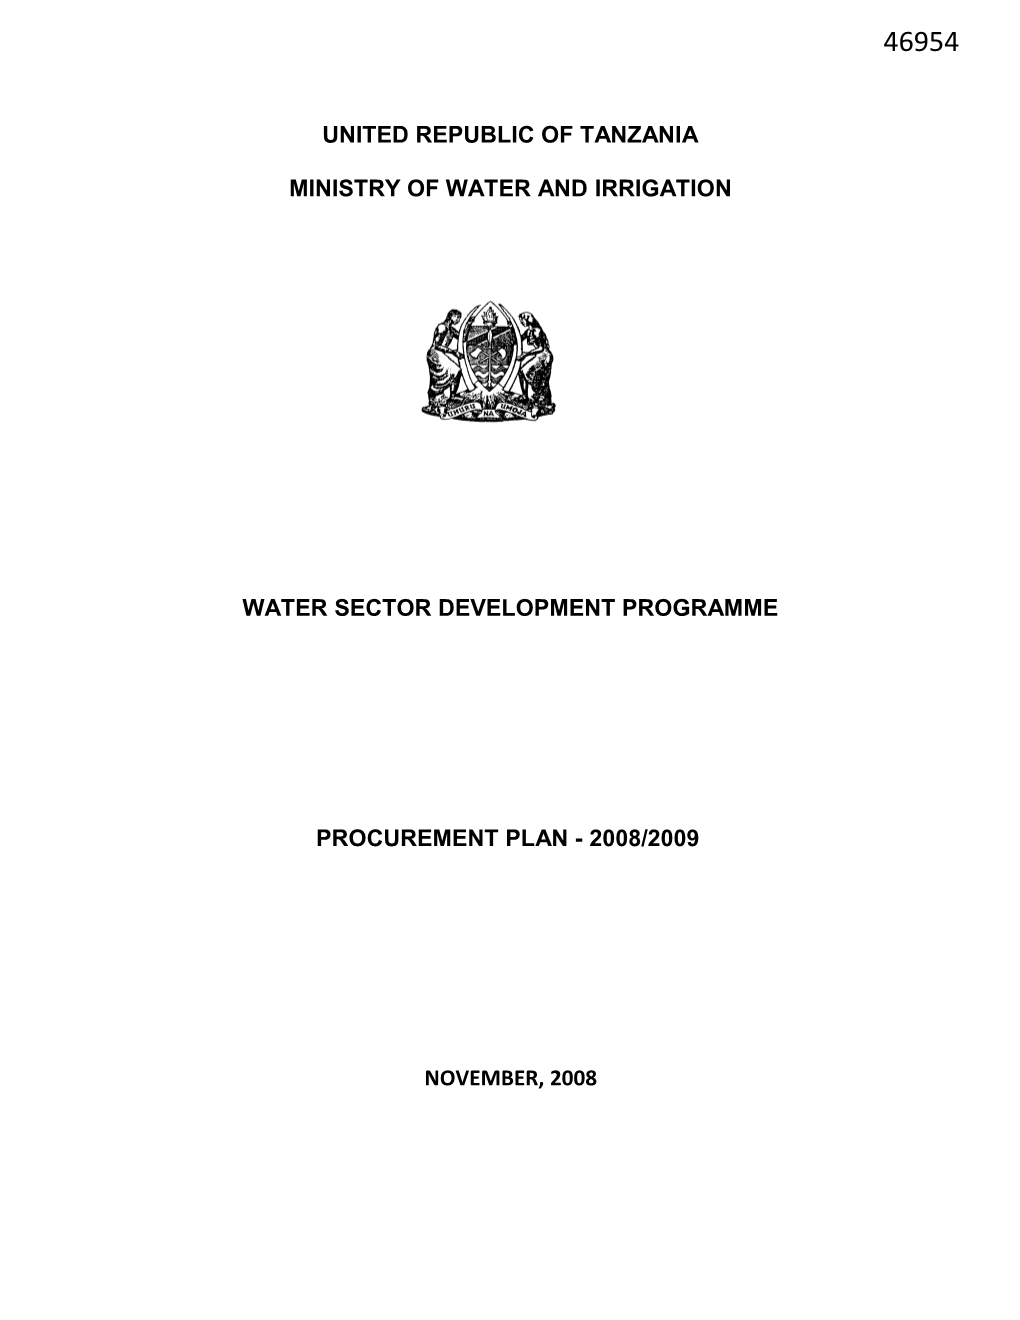 Procurement Plan for 2008/09